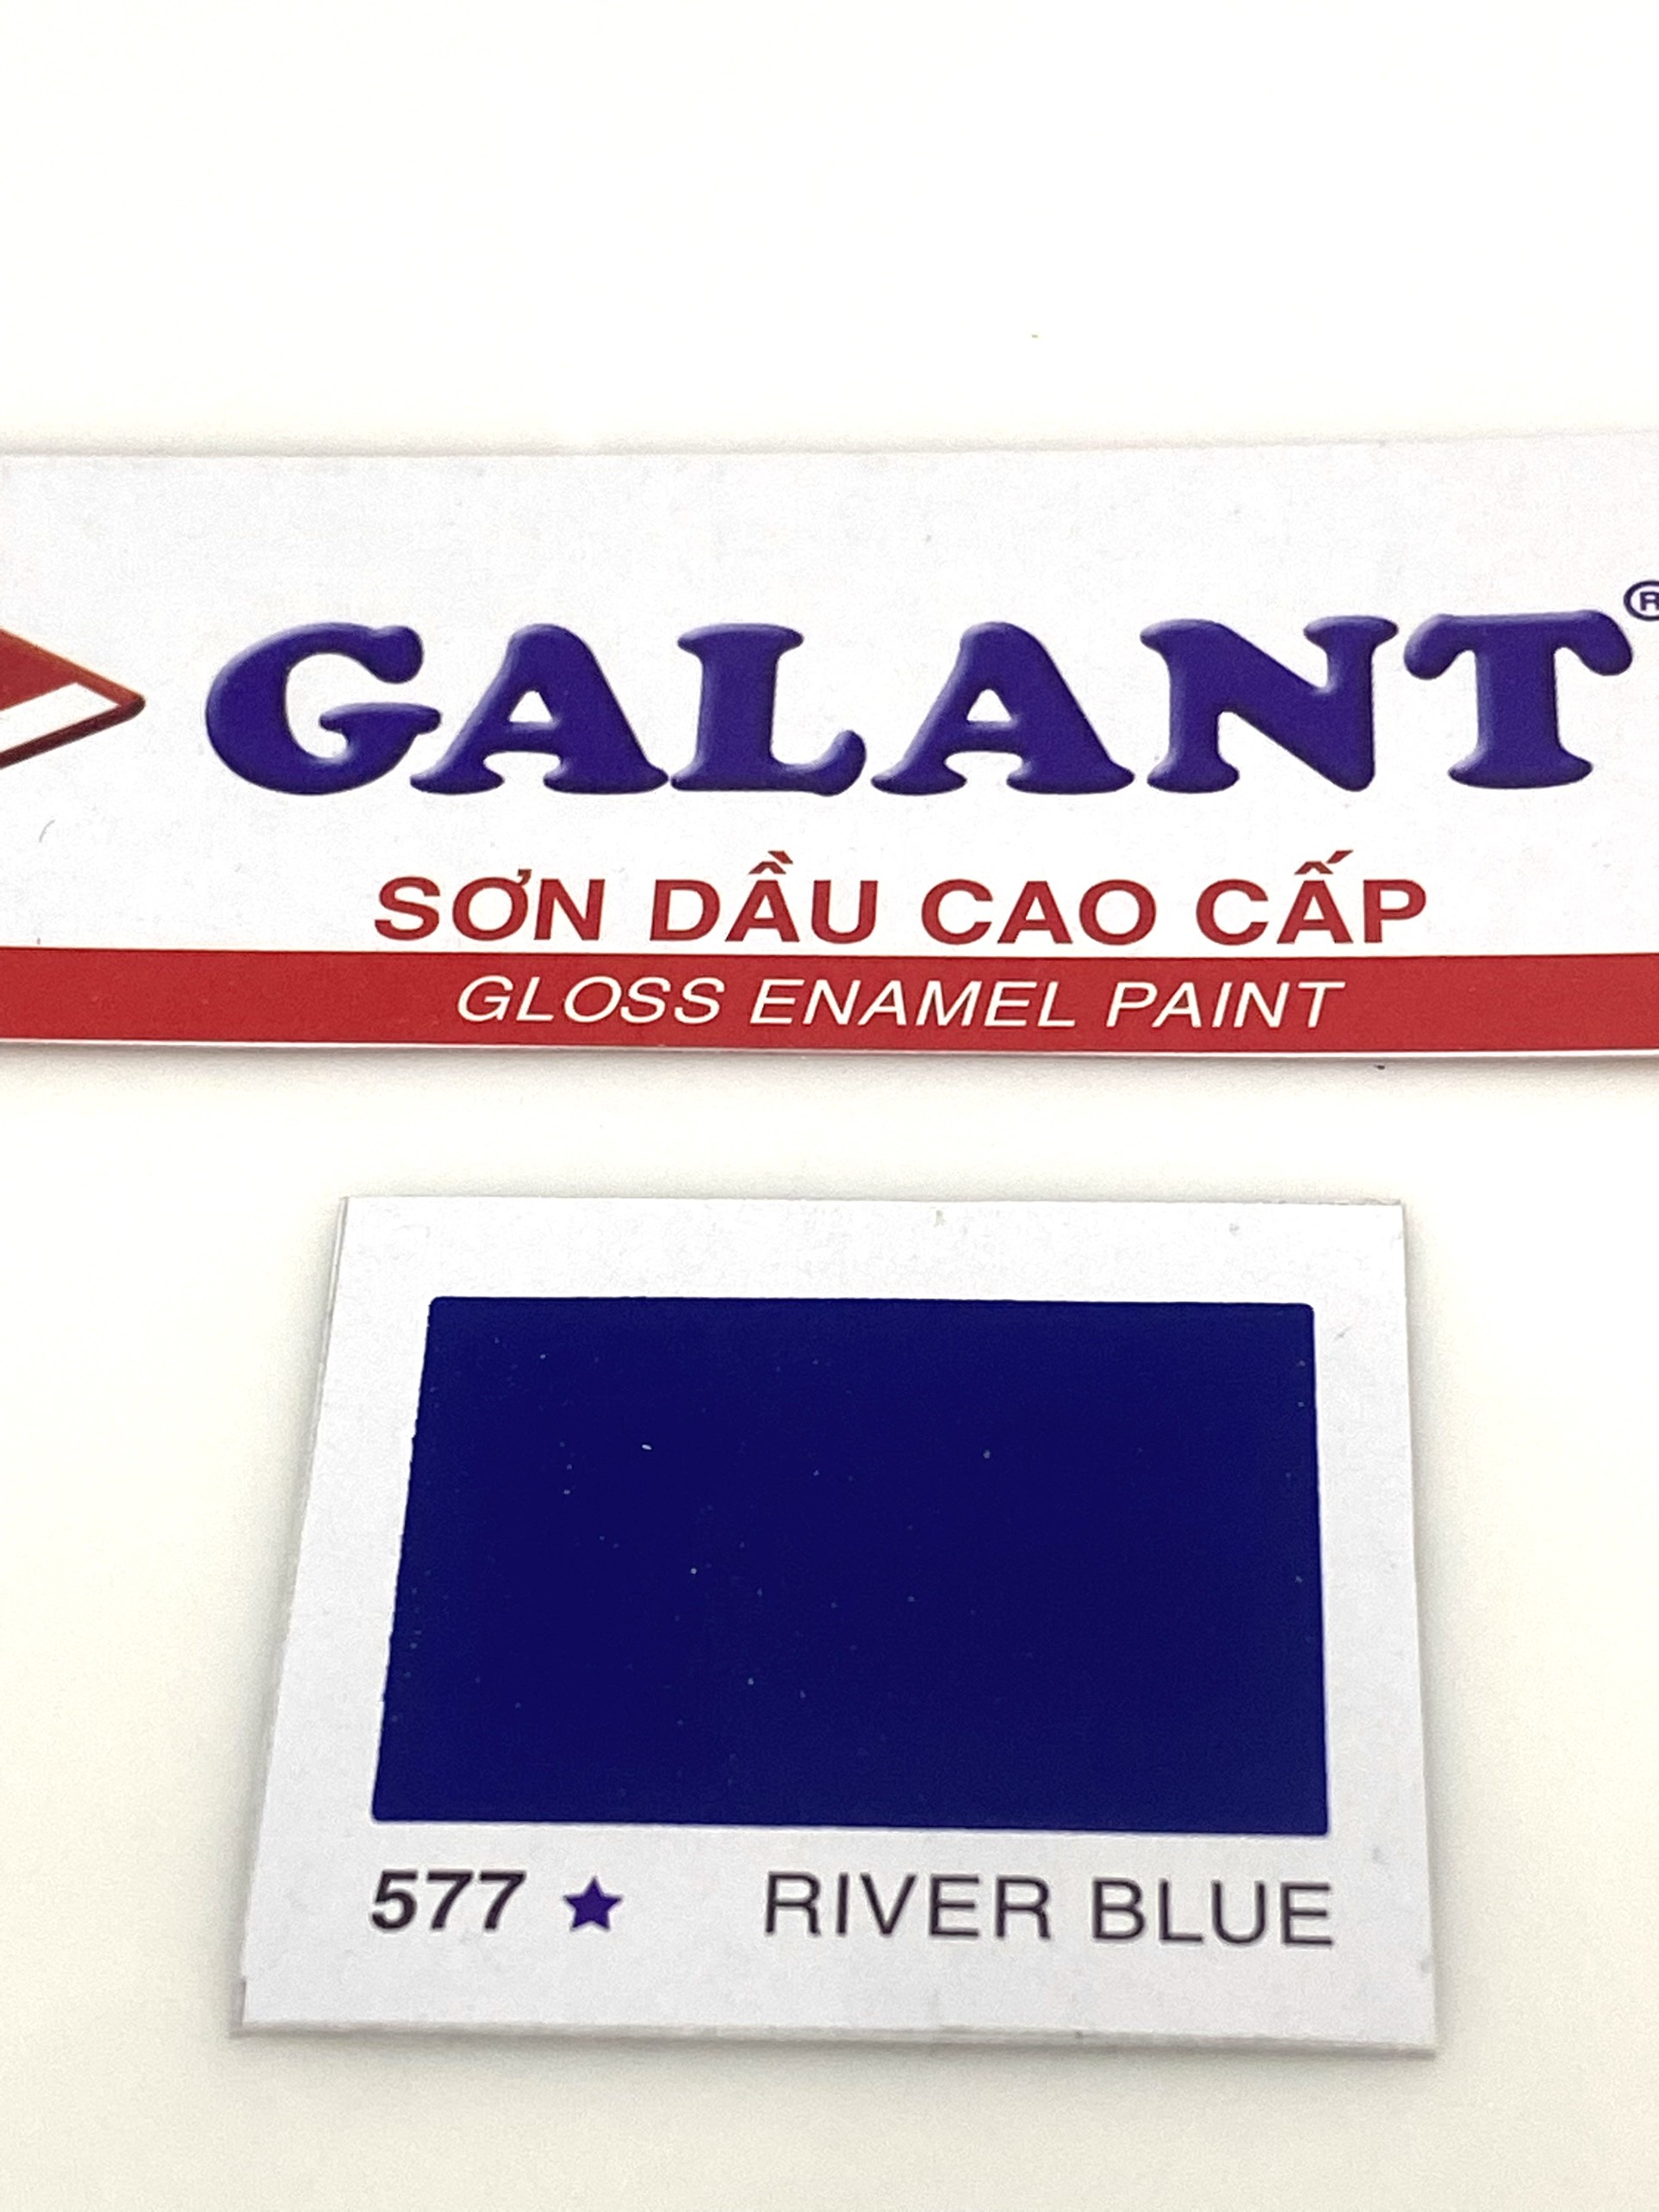 Sơn dầu Galant màu River Blue 577 _ 0.8L